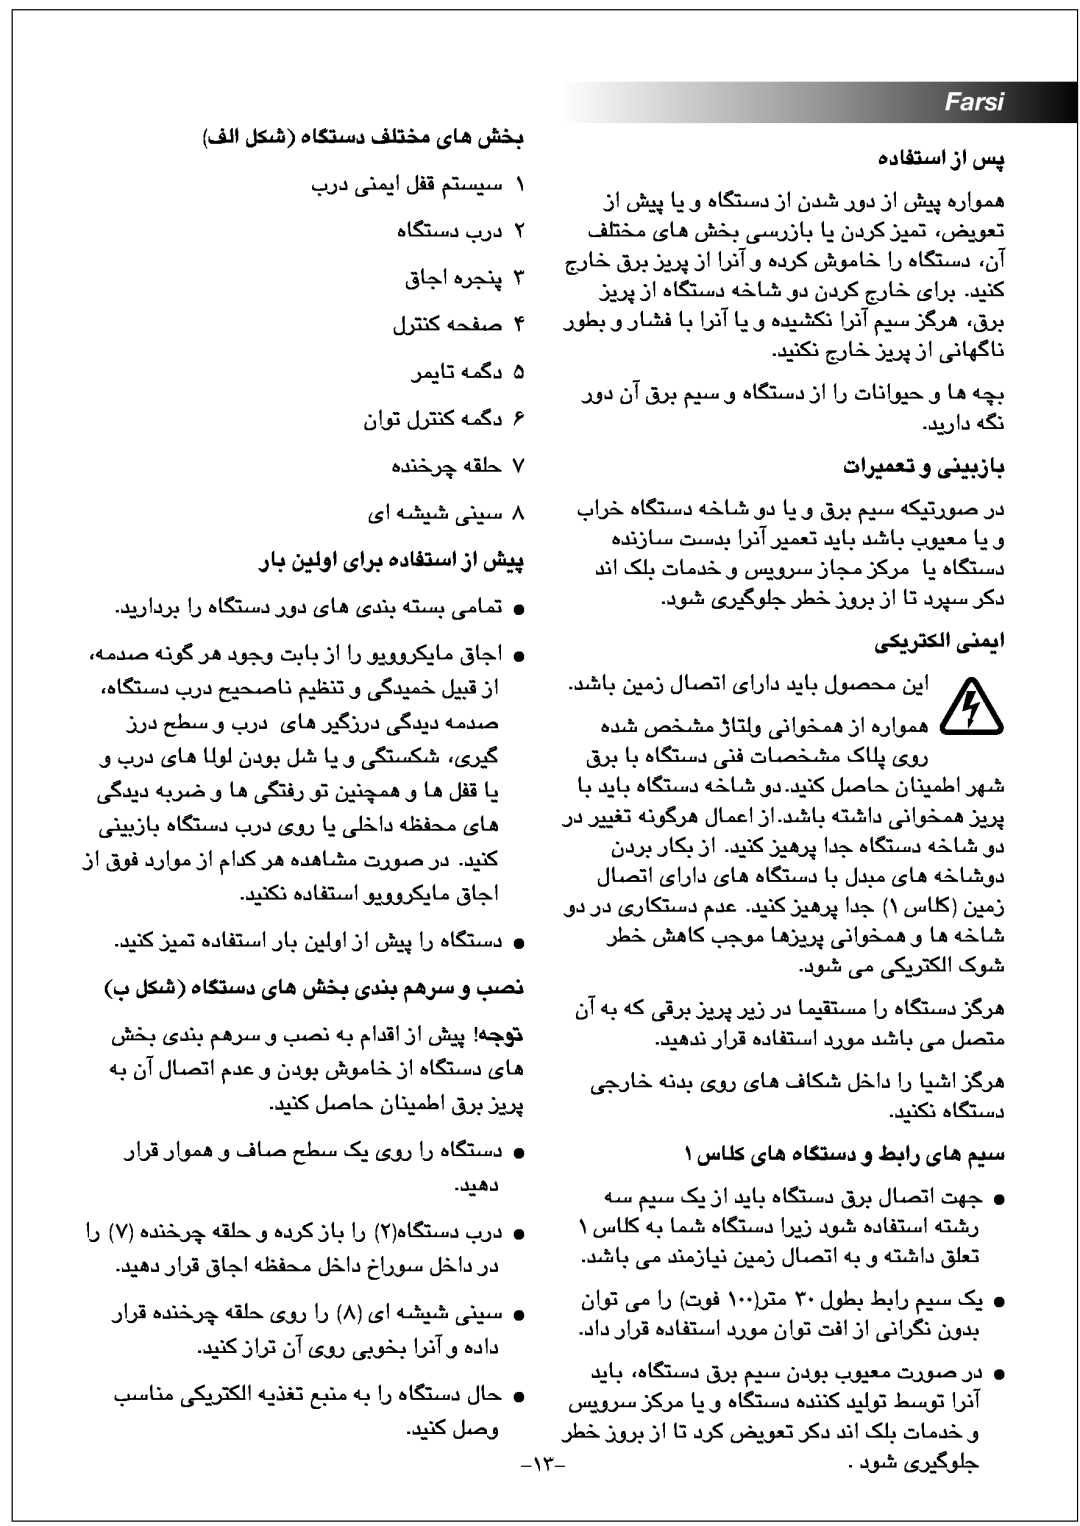 Black & Decker MY2000PSA manual Farsi, ﻒﻟﺍ ﻞﮑﺷ ﻩﺎﮕﺘﺳﺩ ﻒﻠﺘﺨﻣ ﯼﺎﻫ ﺶﺨﺑ, ﻩﺩﺎﻔﺘﺳﺍ ﺯﺍ ﺲﭘ, ﺕﺍﺮﯿﻤﻌﺗ ﻭ ﯽﻨﯿﺑﺯﺎﺑ, ﯽﮑﯾﺮﺘﮑﻟﺍ ﯽﻨﻤﯾﺍ 